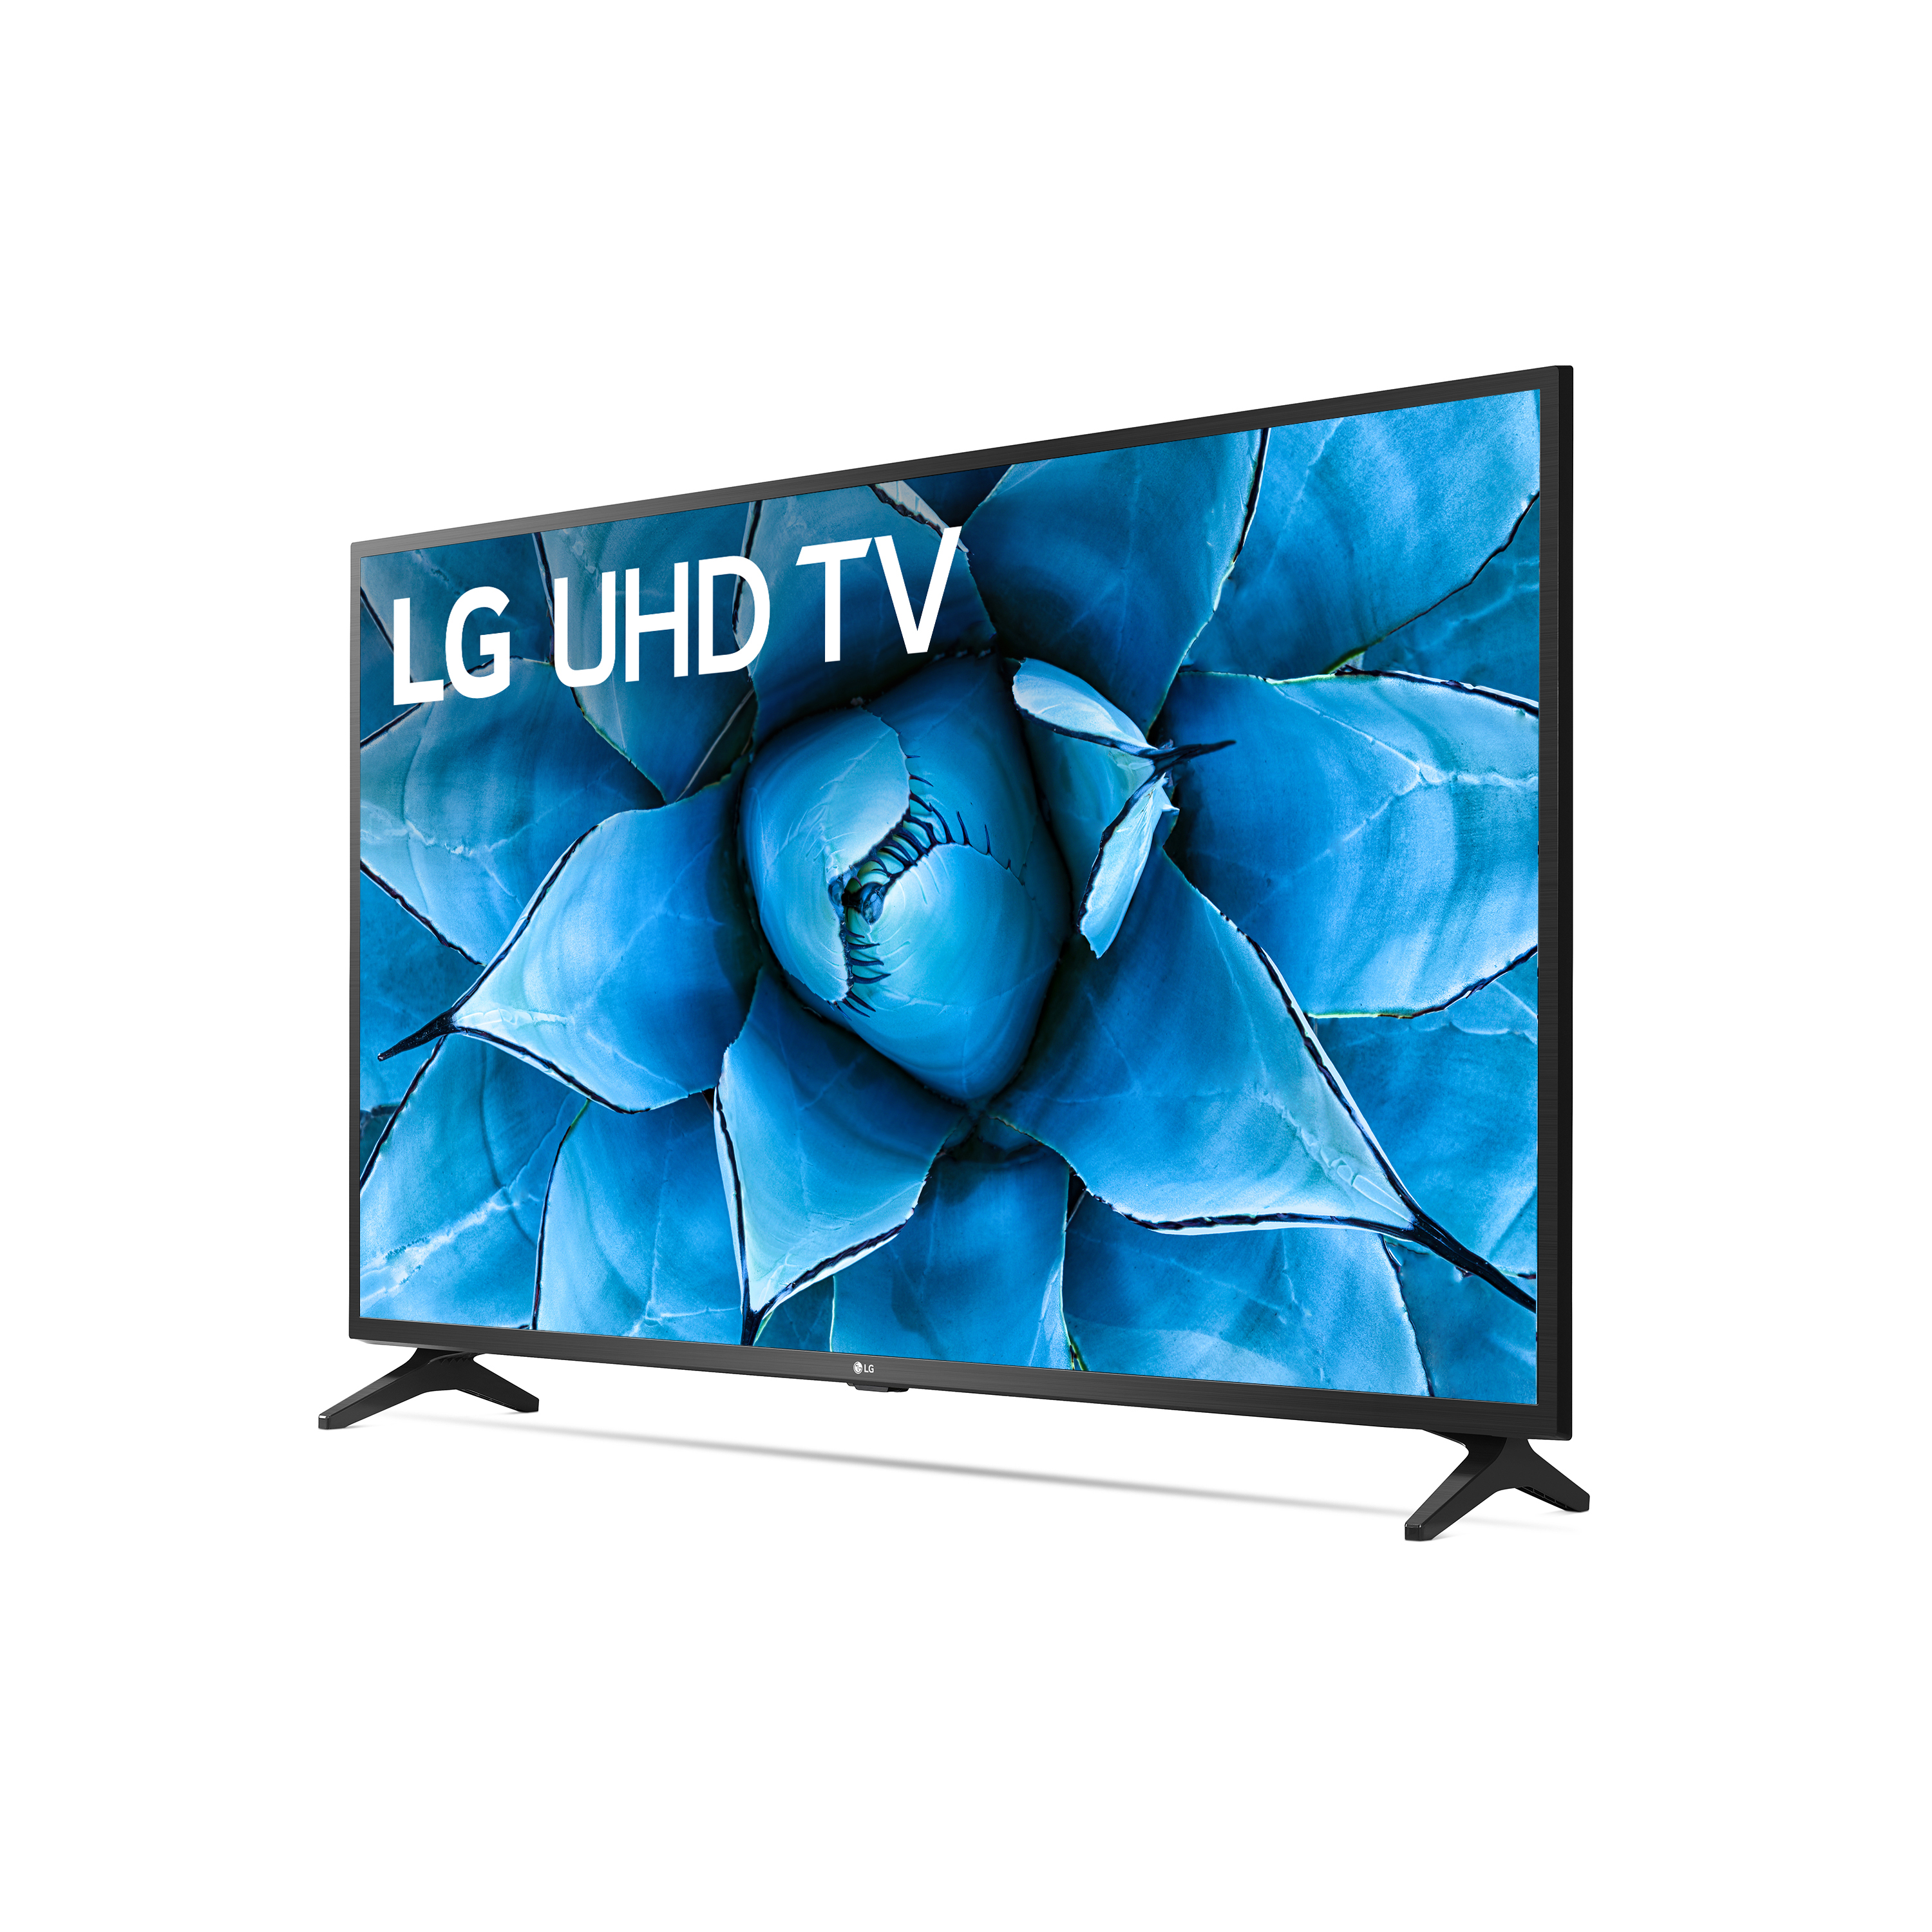 LG 65" Class 4K UHD 2160P Smart TV 65UN7300PUF 2020 Model - image 5 of 28